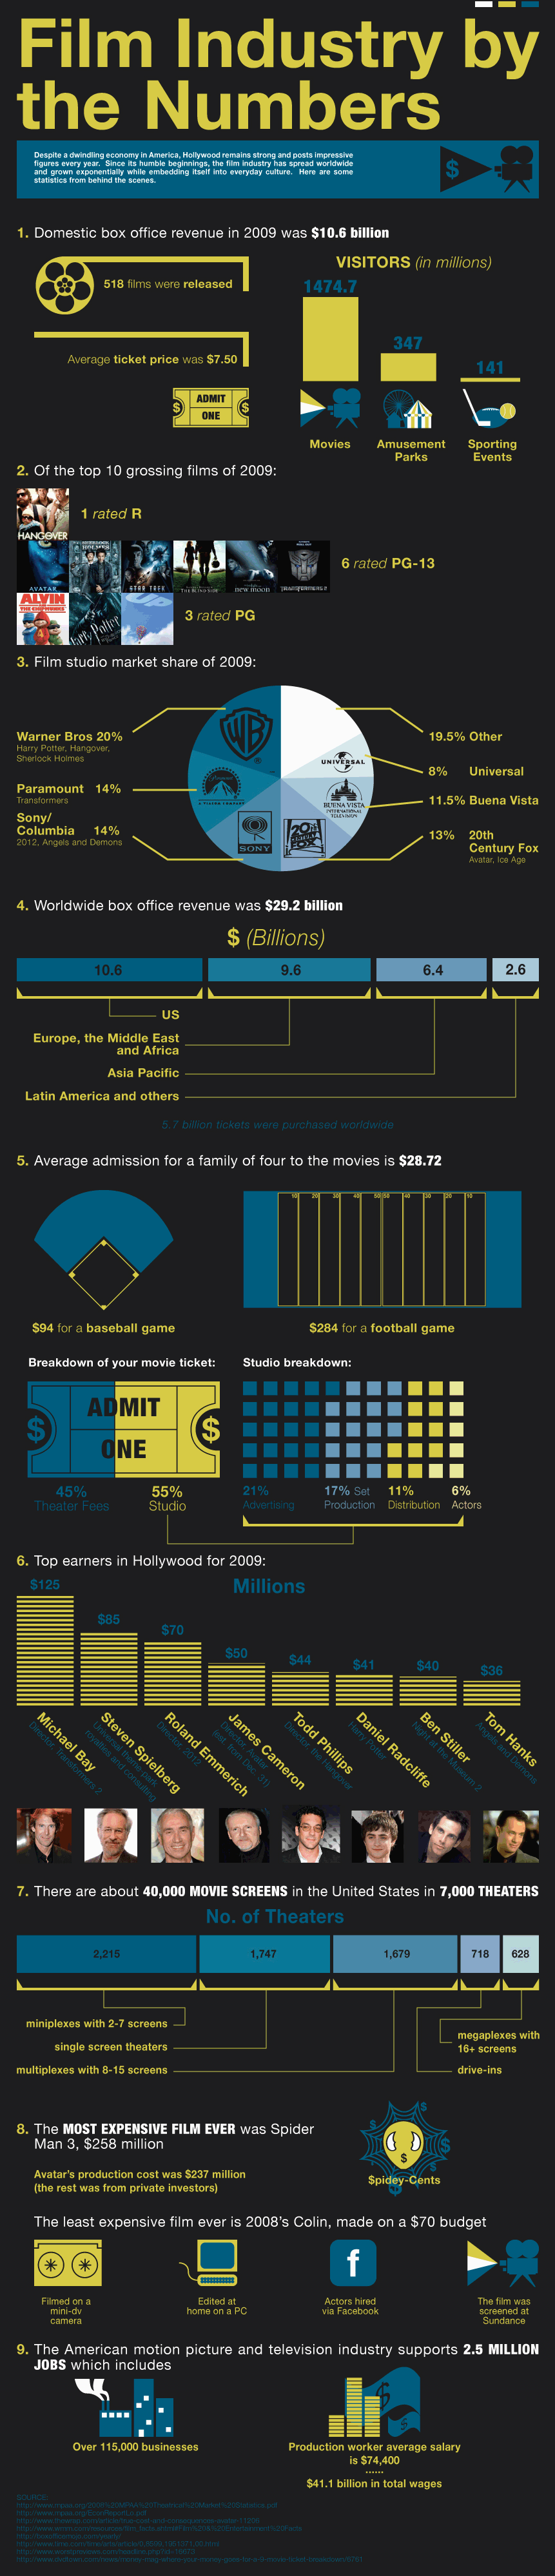 Statistics of the Film Industry